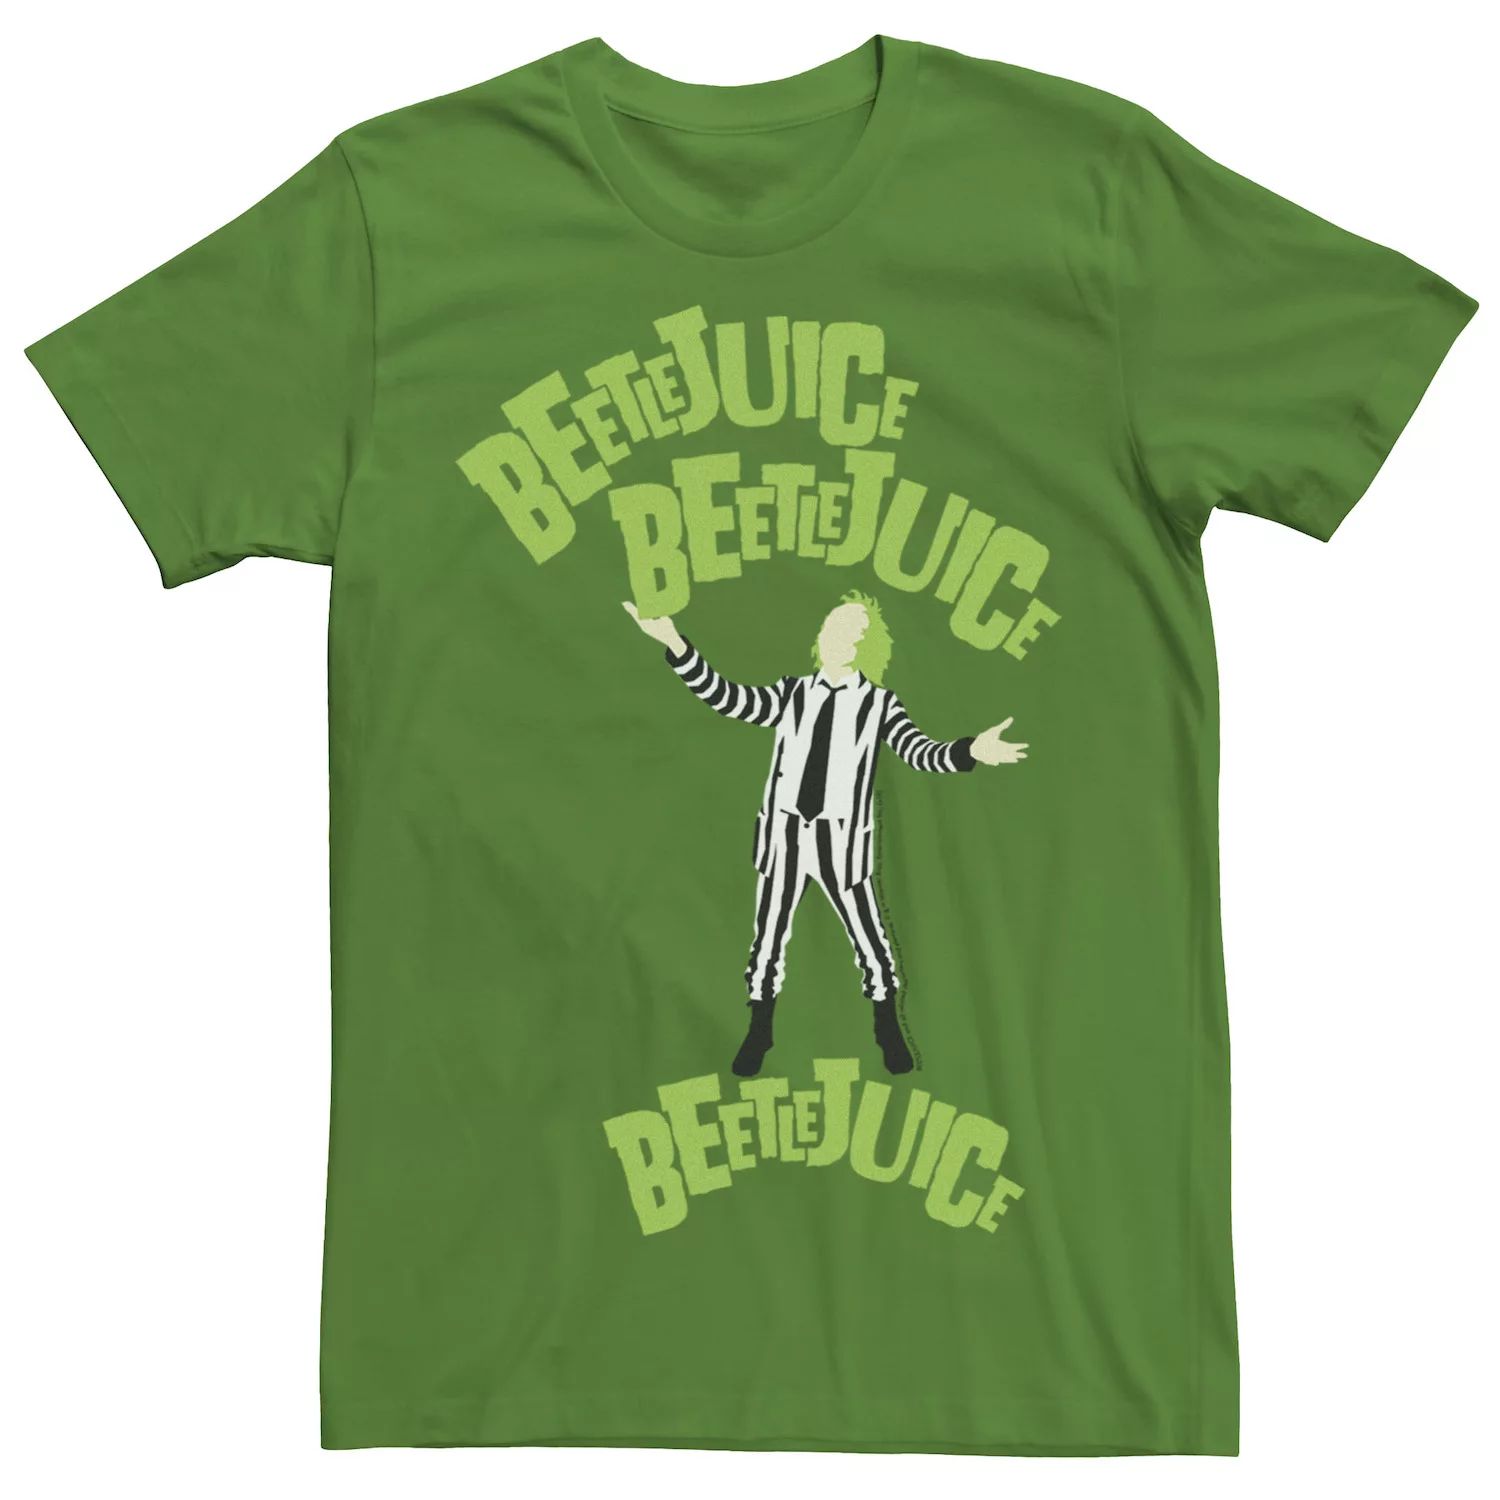 Мужская футболка Beetlejuice Chant с надписью и портретом Licensed Character фото